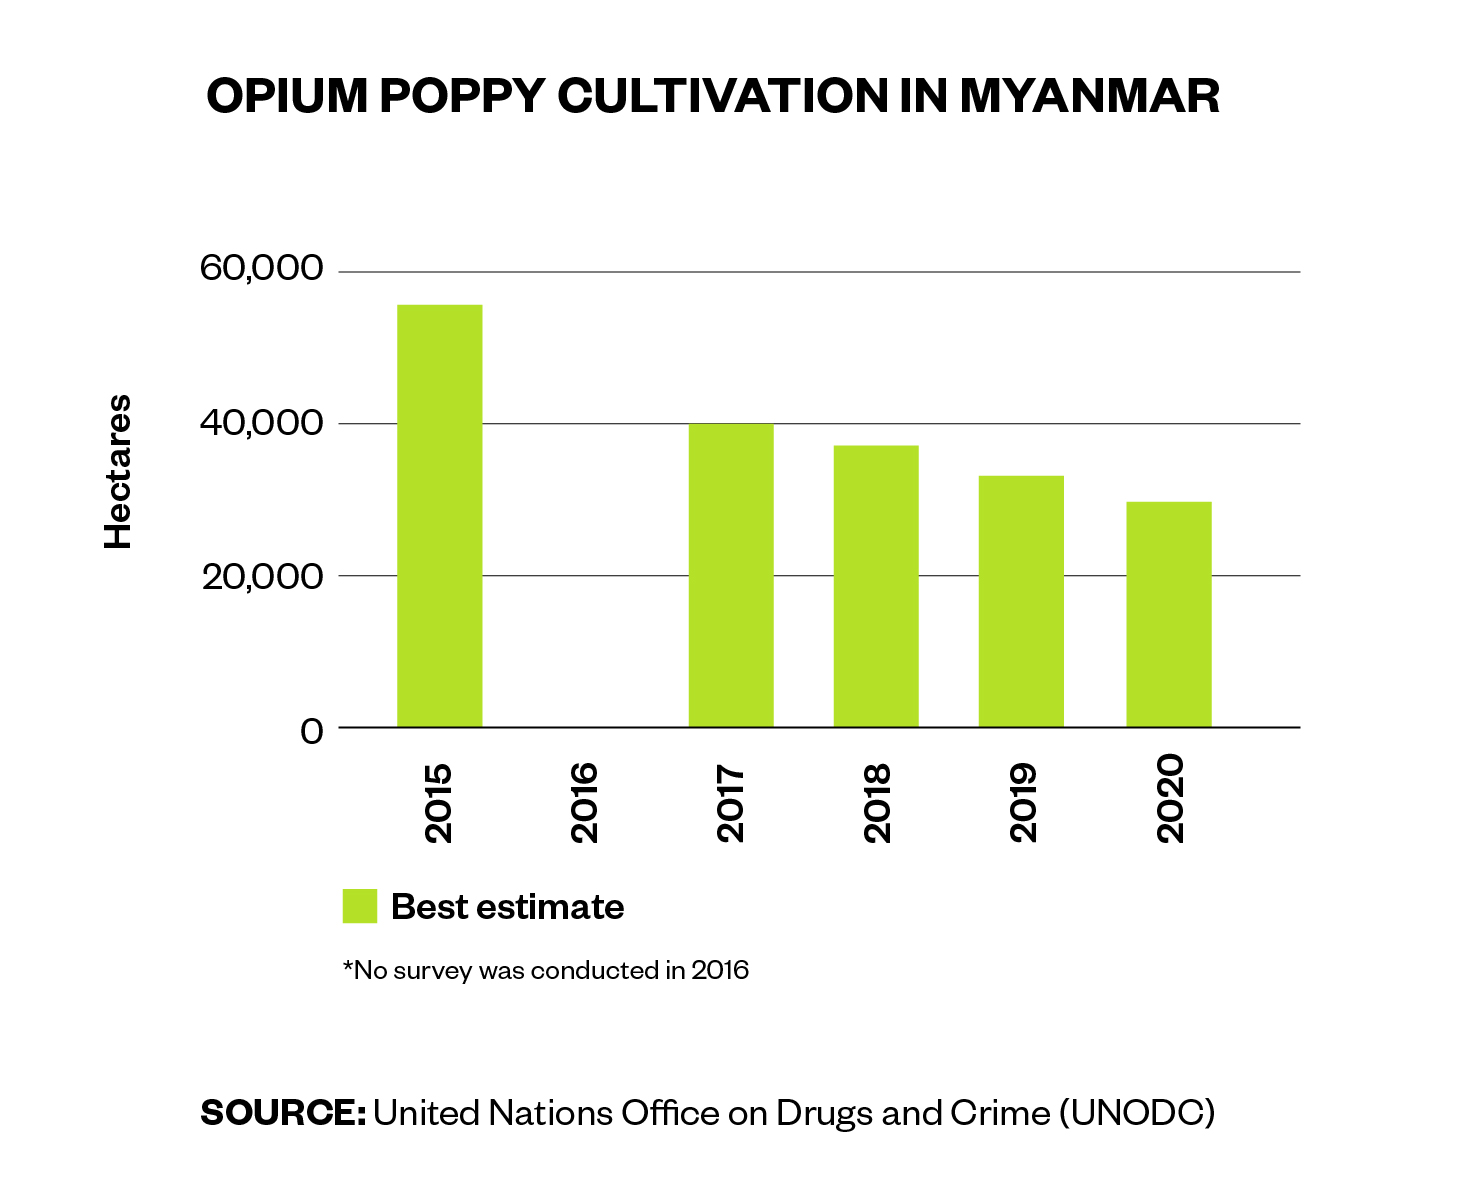 Opium poppy cultivation in Myanmar